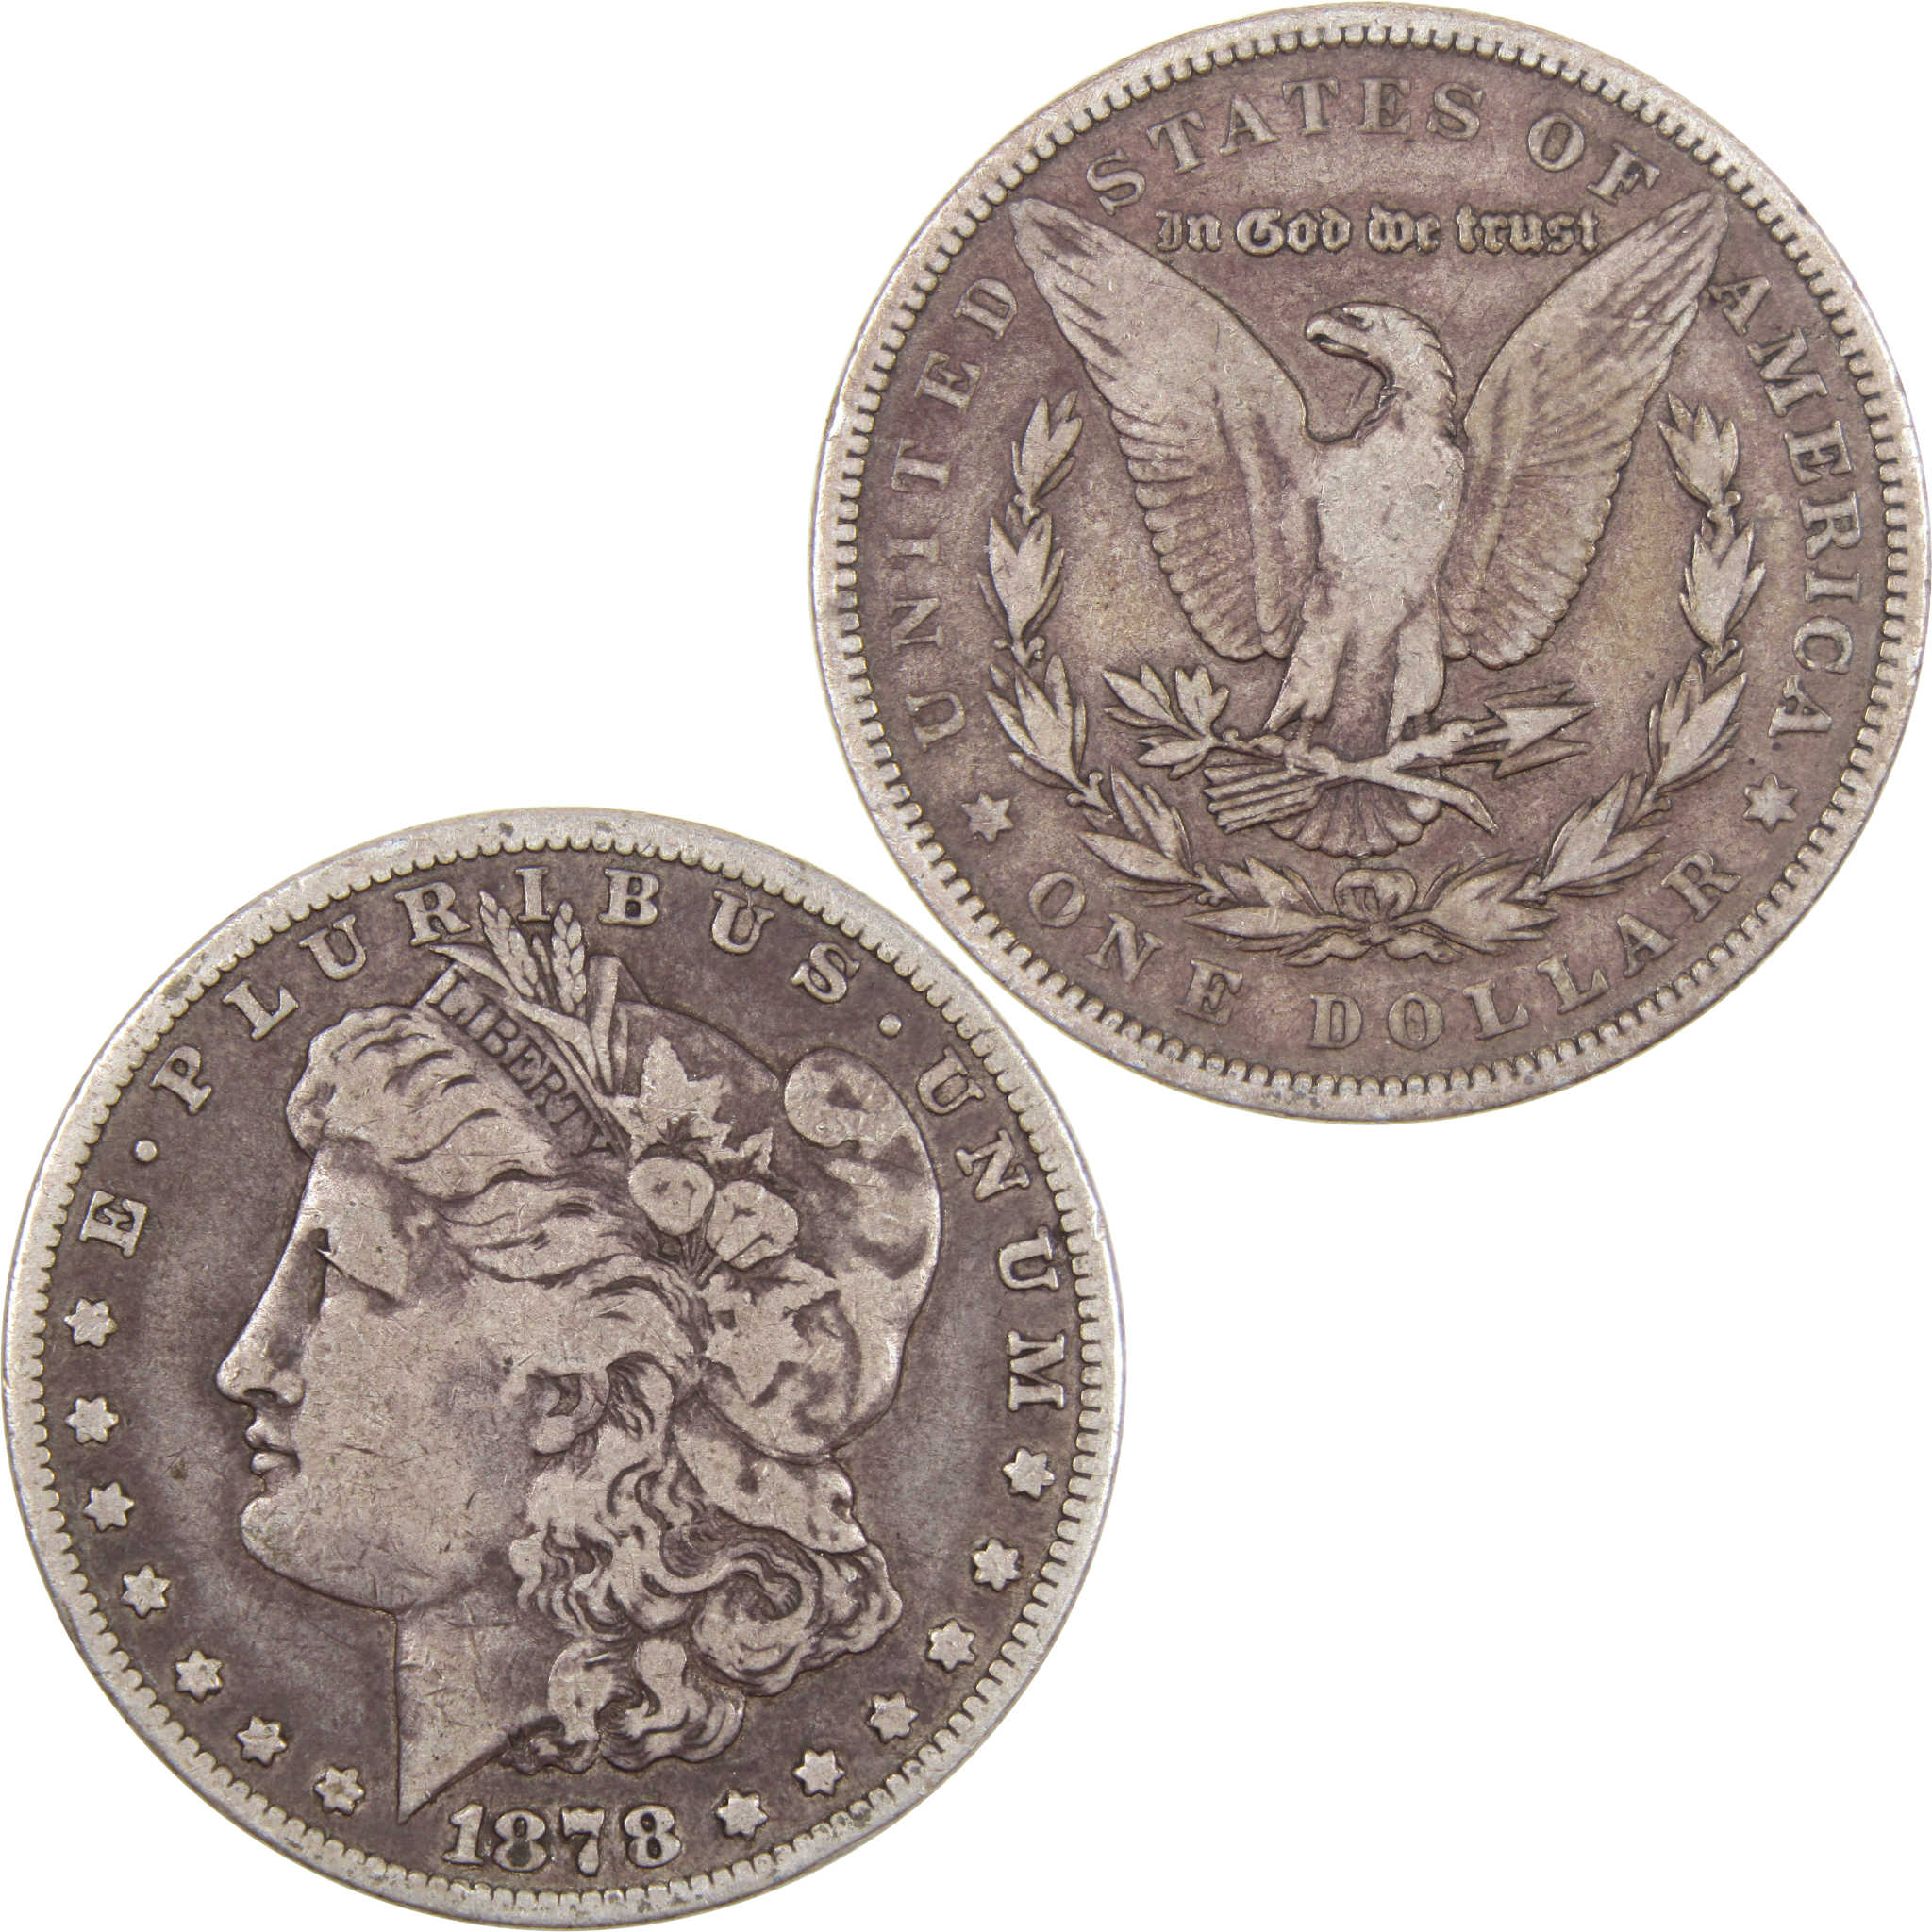 1878 7TF Rev 78 Morgan Dollar F Fine 90% Silver US Coin SKU:I3044 - Morgan coin - Morgan silver dollar - Morgan silver dollar for sale - Profile Coins &amp; Collectibles